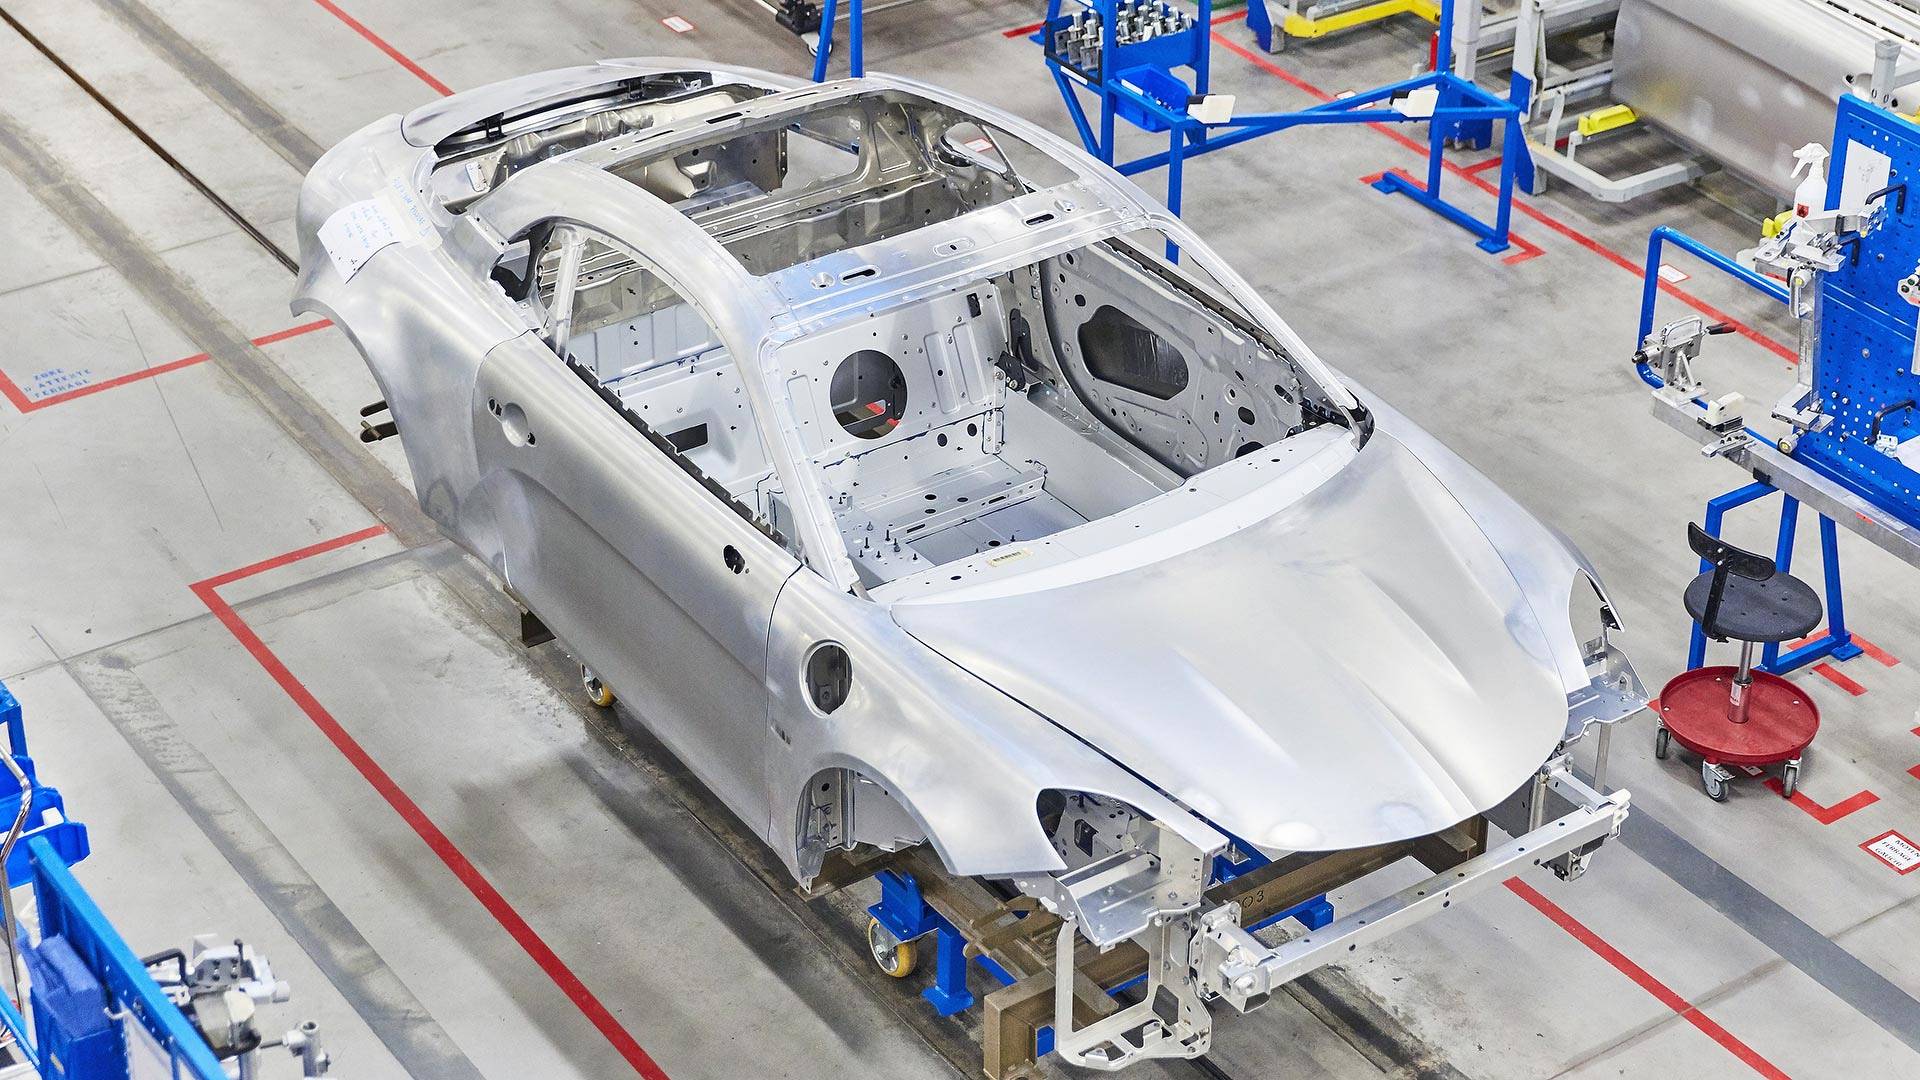 2017 - Fabrication de l'Alpine A110 à l'usine de Dieppe